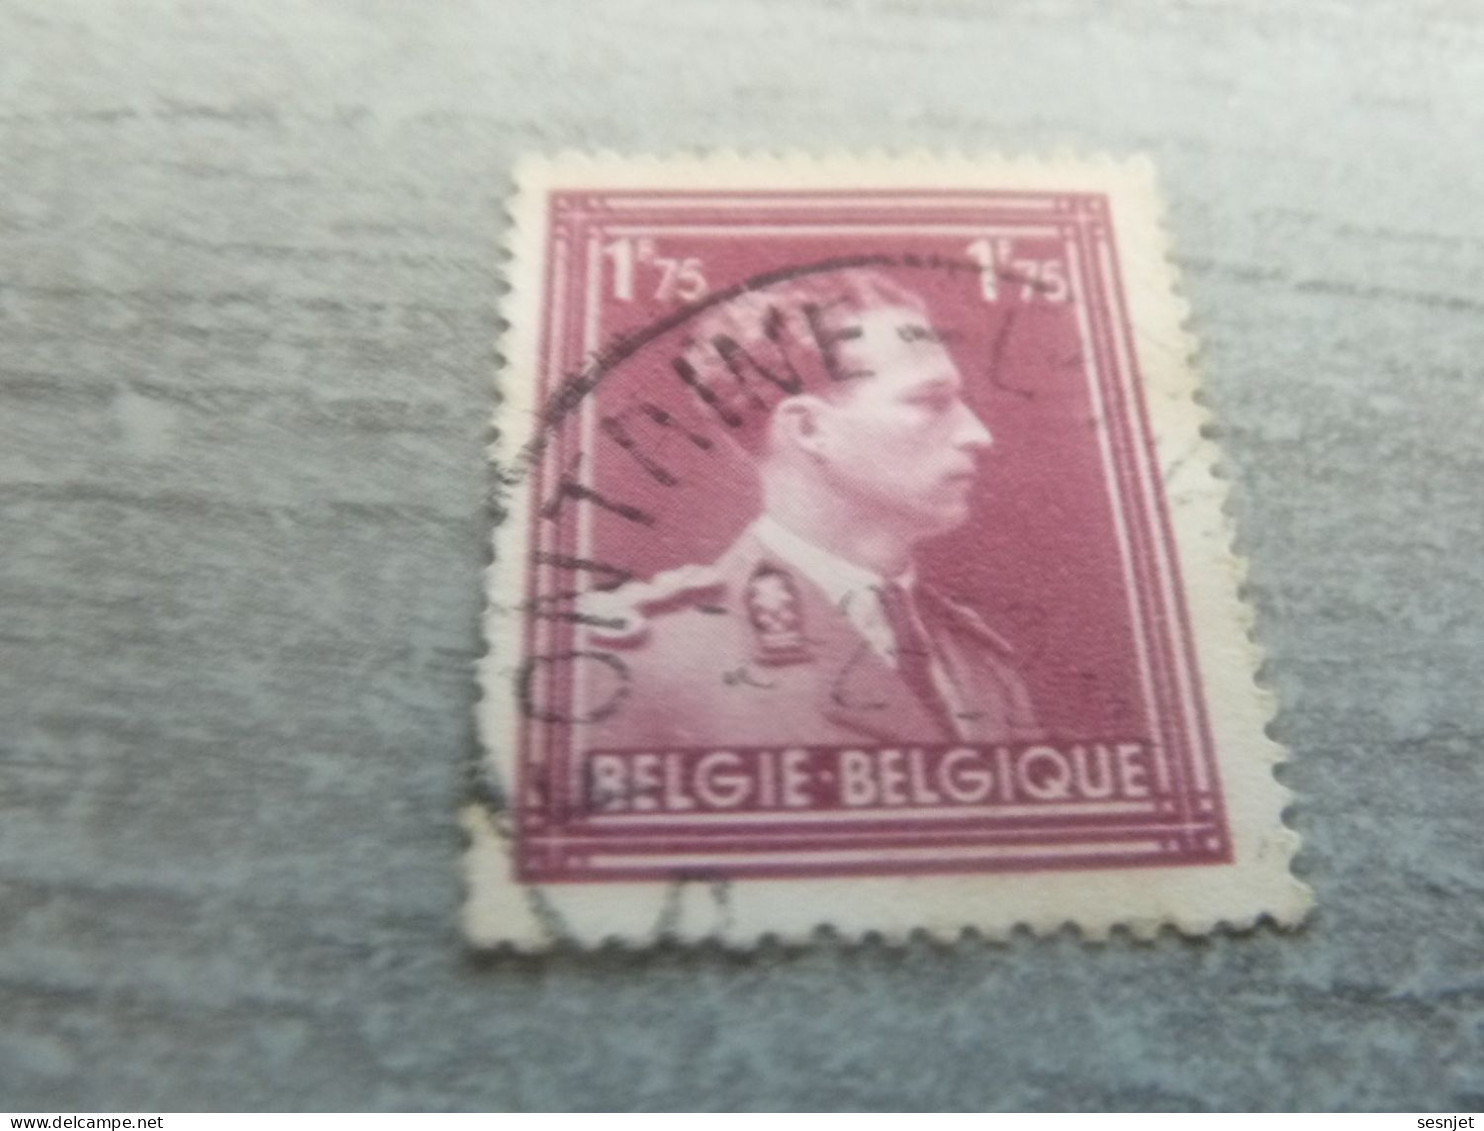 Belgique - Albert 1 - Val  1f.75 - Rose-Lilas - Oblitéré - Année 1945 - - Gebraucht